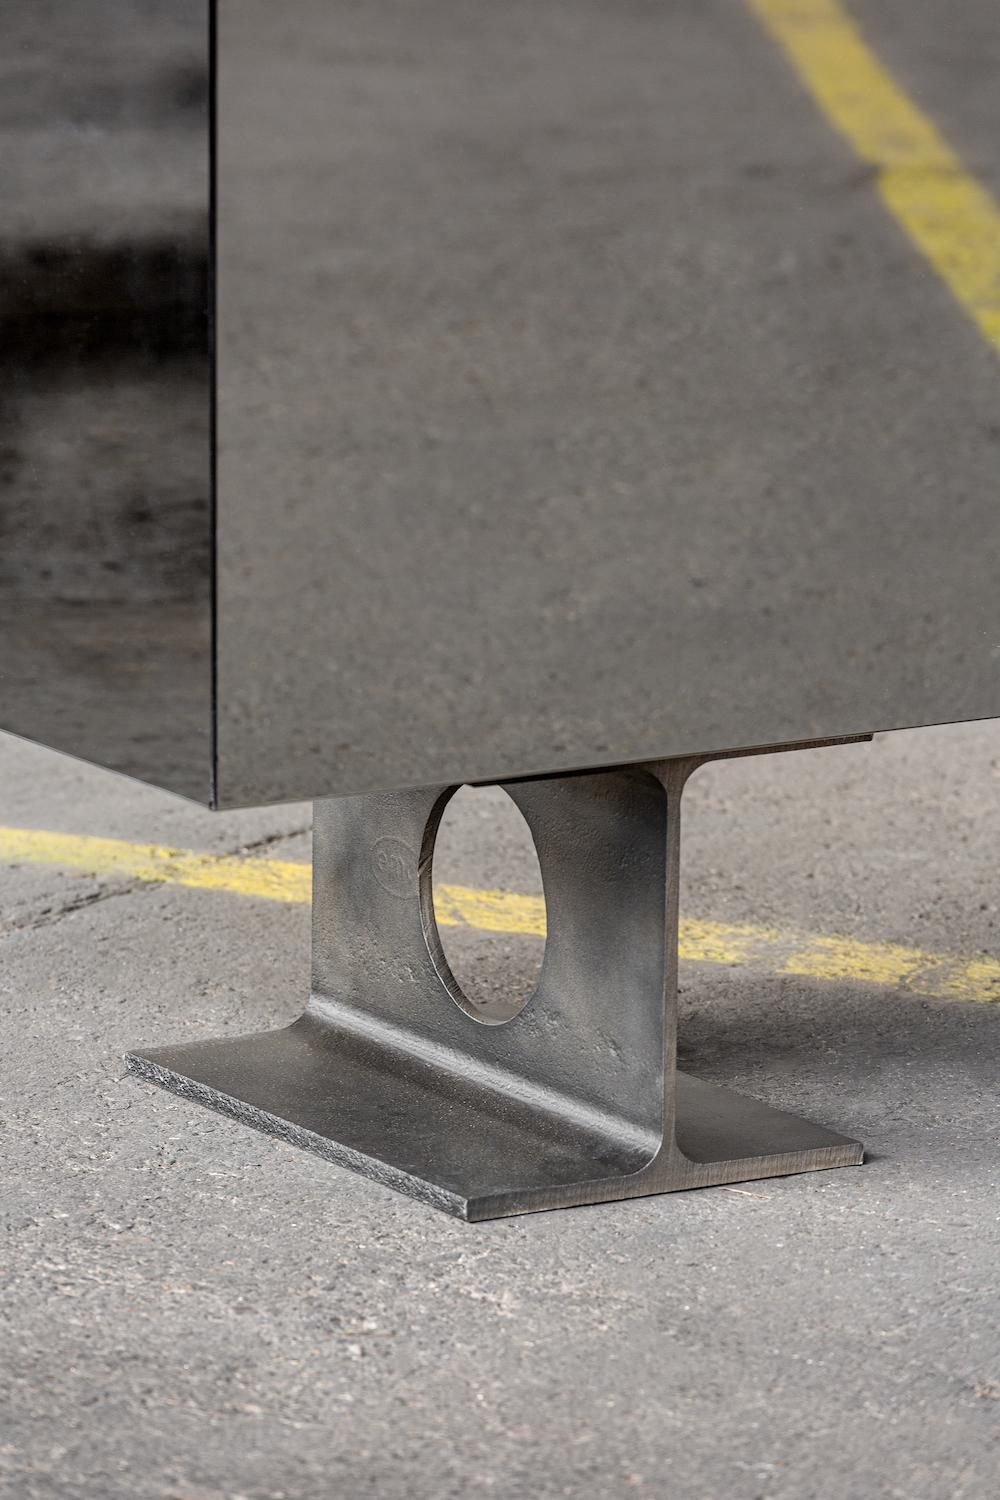 Steel Sculptural Brutalist Mirror Cabinet, Spinzi Milan, Industrial Collectible Design For Sale